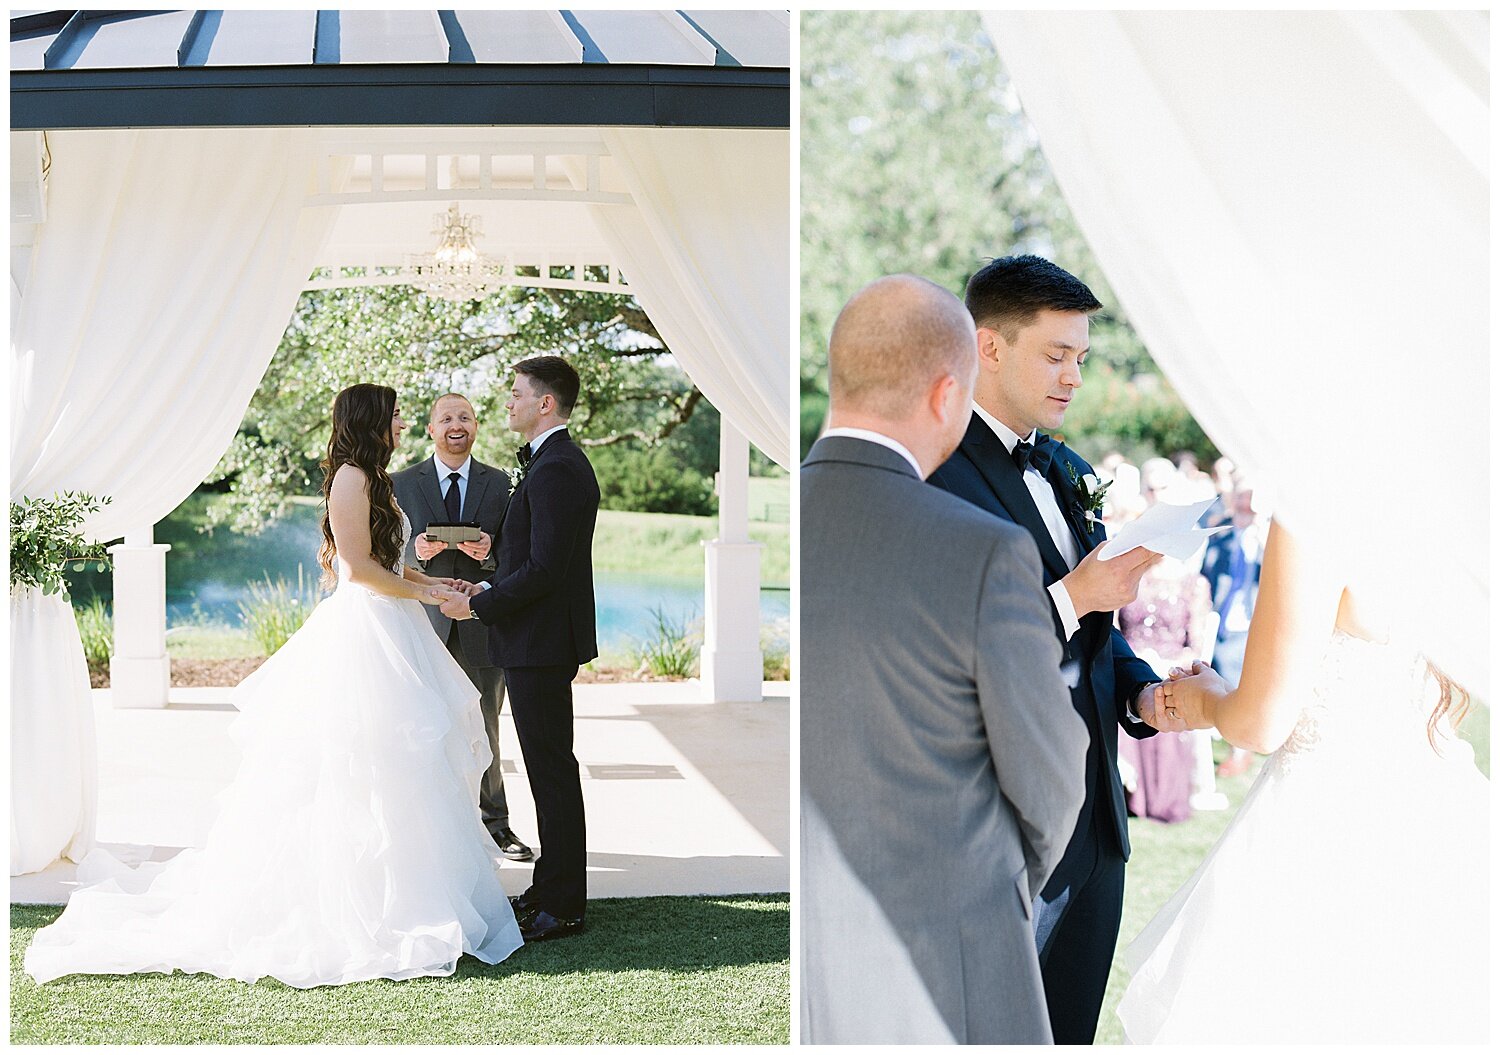 Kendall Point - Boerne TX Wedding Photography22.jpg